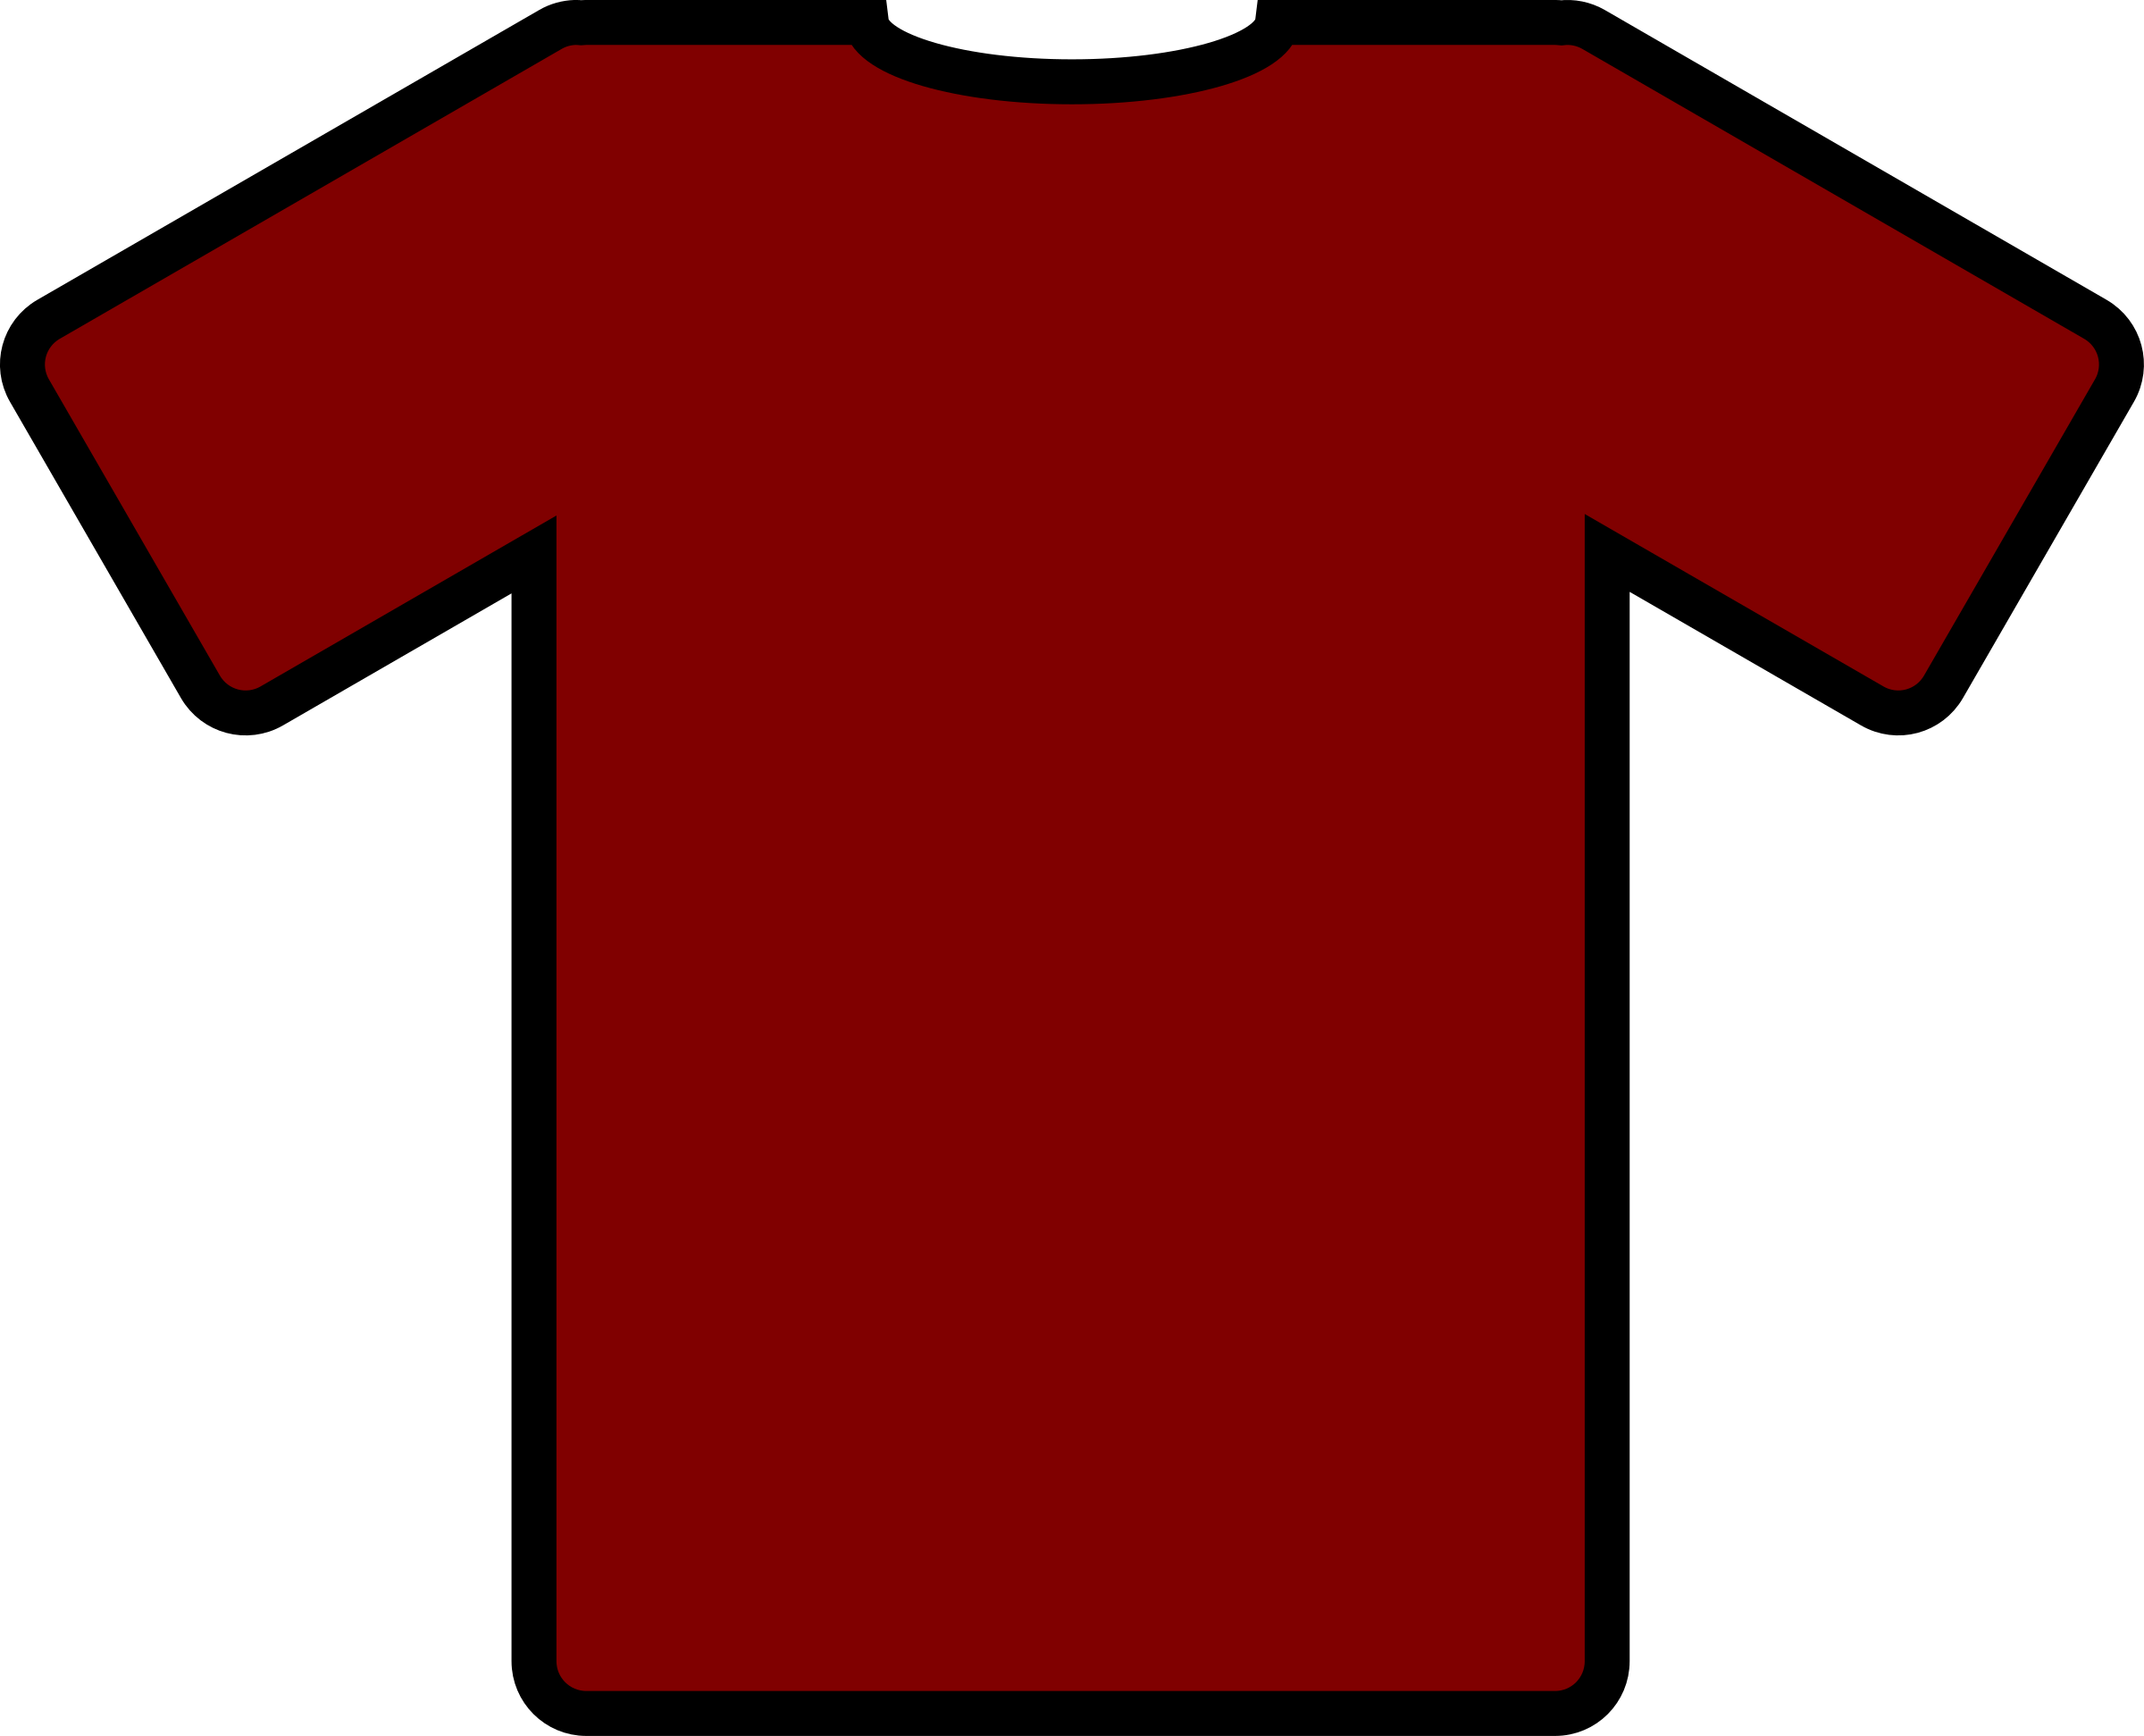 T-shirt clipart red tshirt